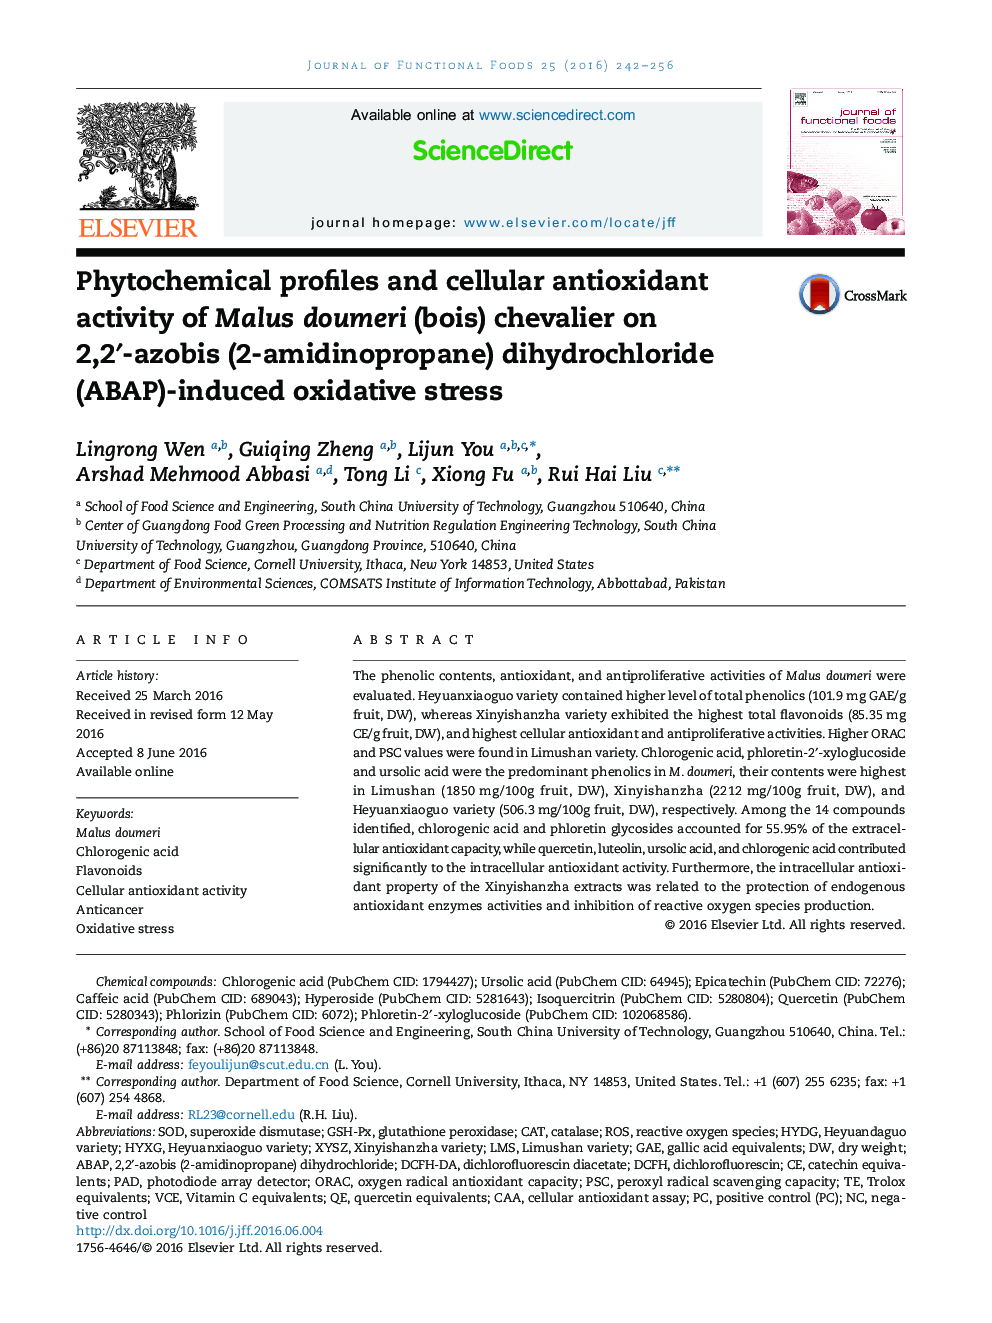 Phytochemical profiles and cellular antioxidant activity of Malus doumeri (bois) chevalier on 2,2â²-azobis (2-amidinopropane) dihydrochloride (ABAP)-induced oxidative stress